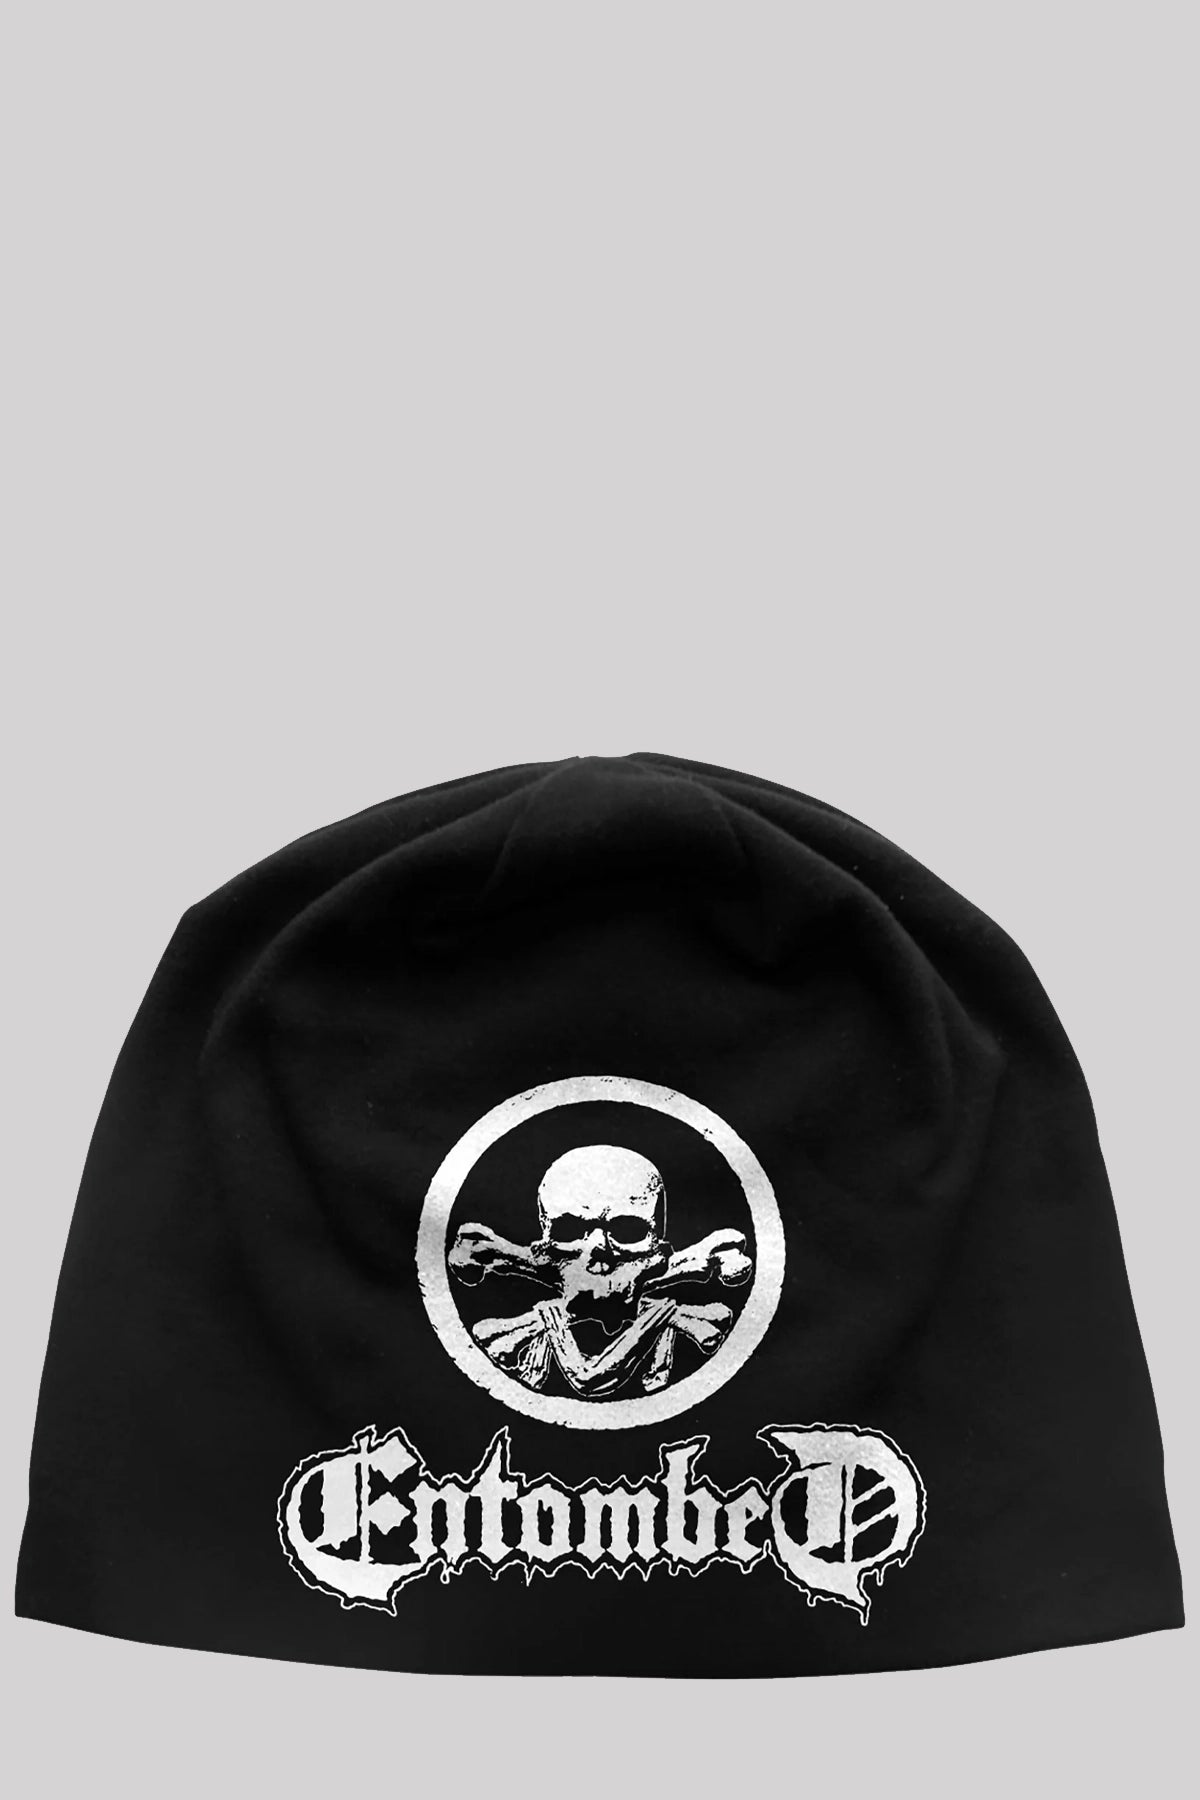 Entombed Unisex Beanie Hat: Skull Logo Official Band Merch